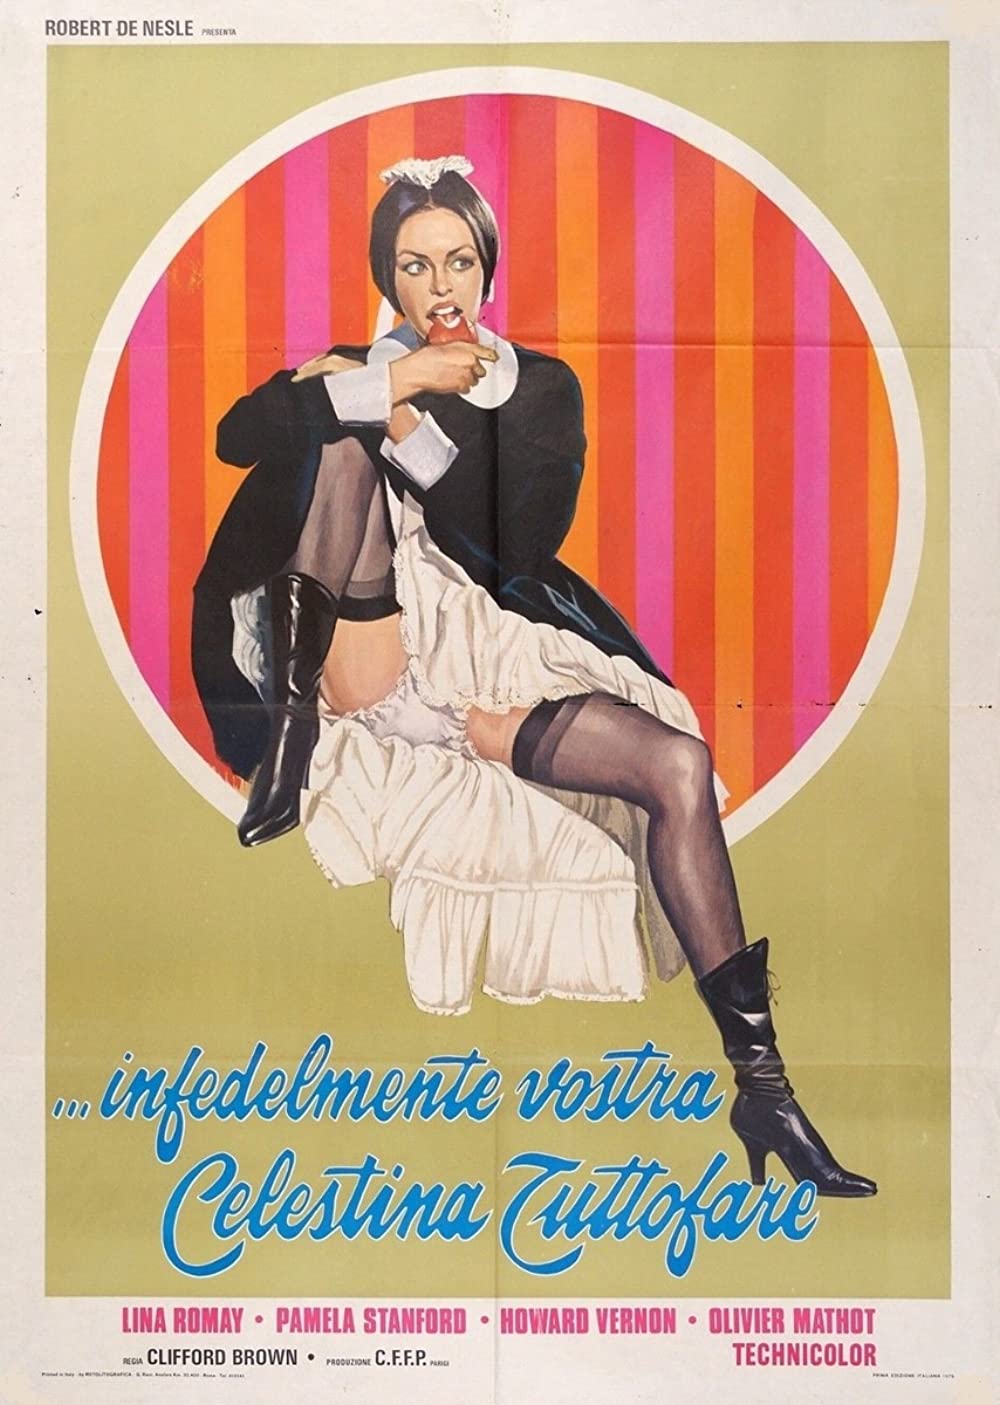 Celestine, Maid at Your Service (1974) - Original Poster - vintagepornfun.com